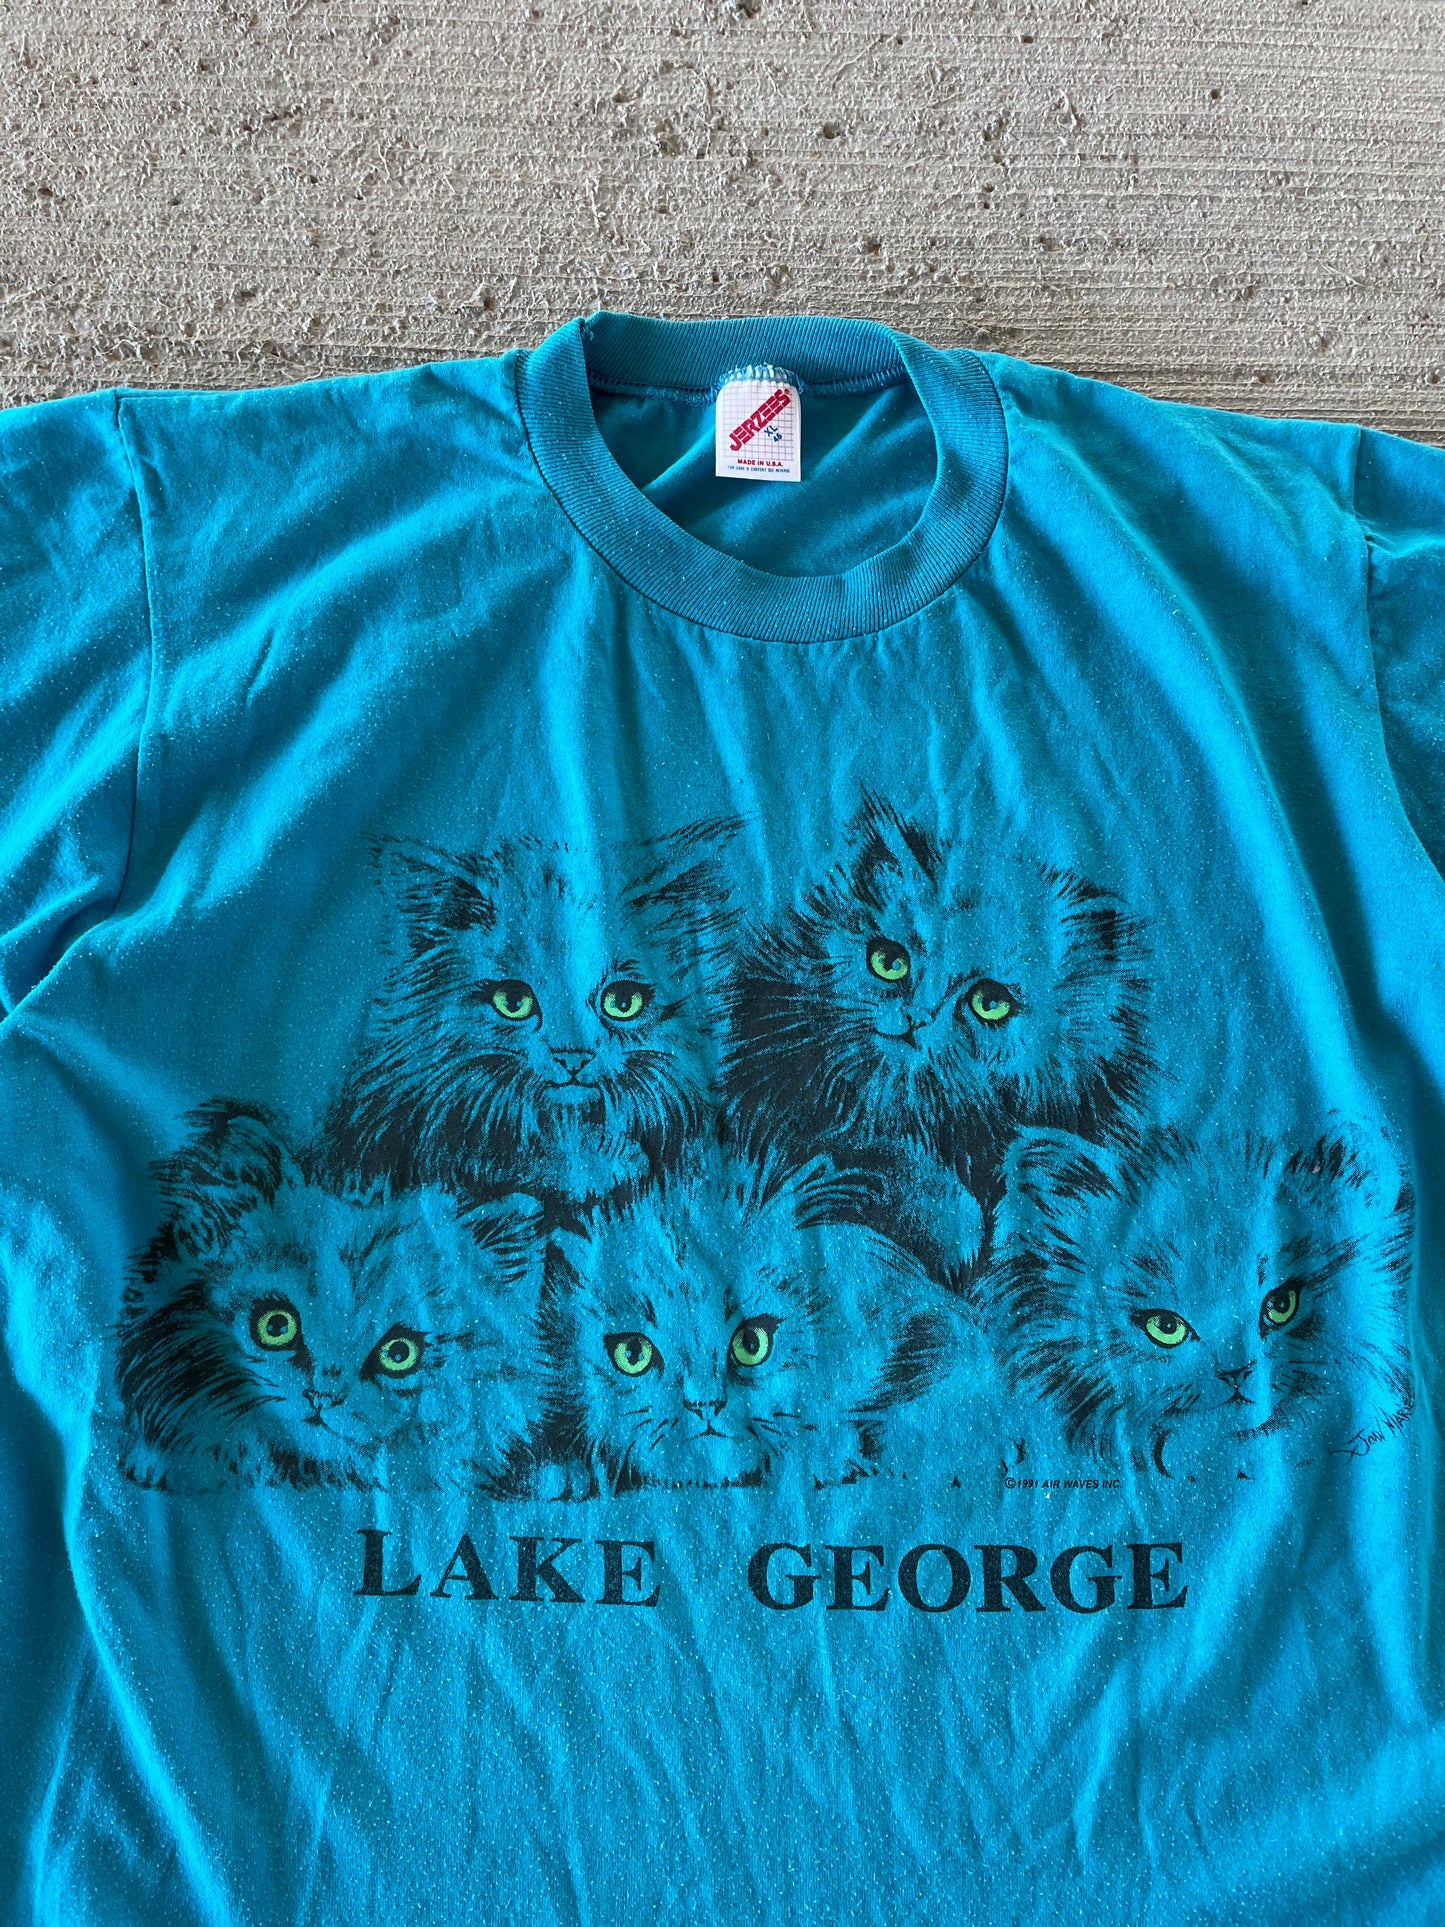 1991 Lake George Cats tee